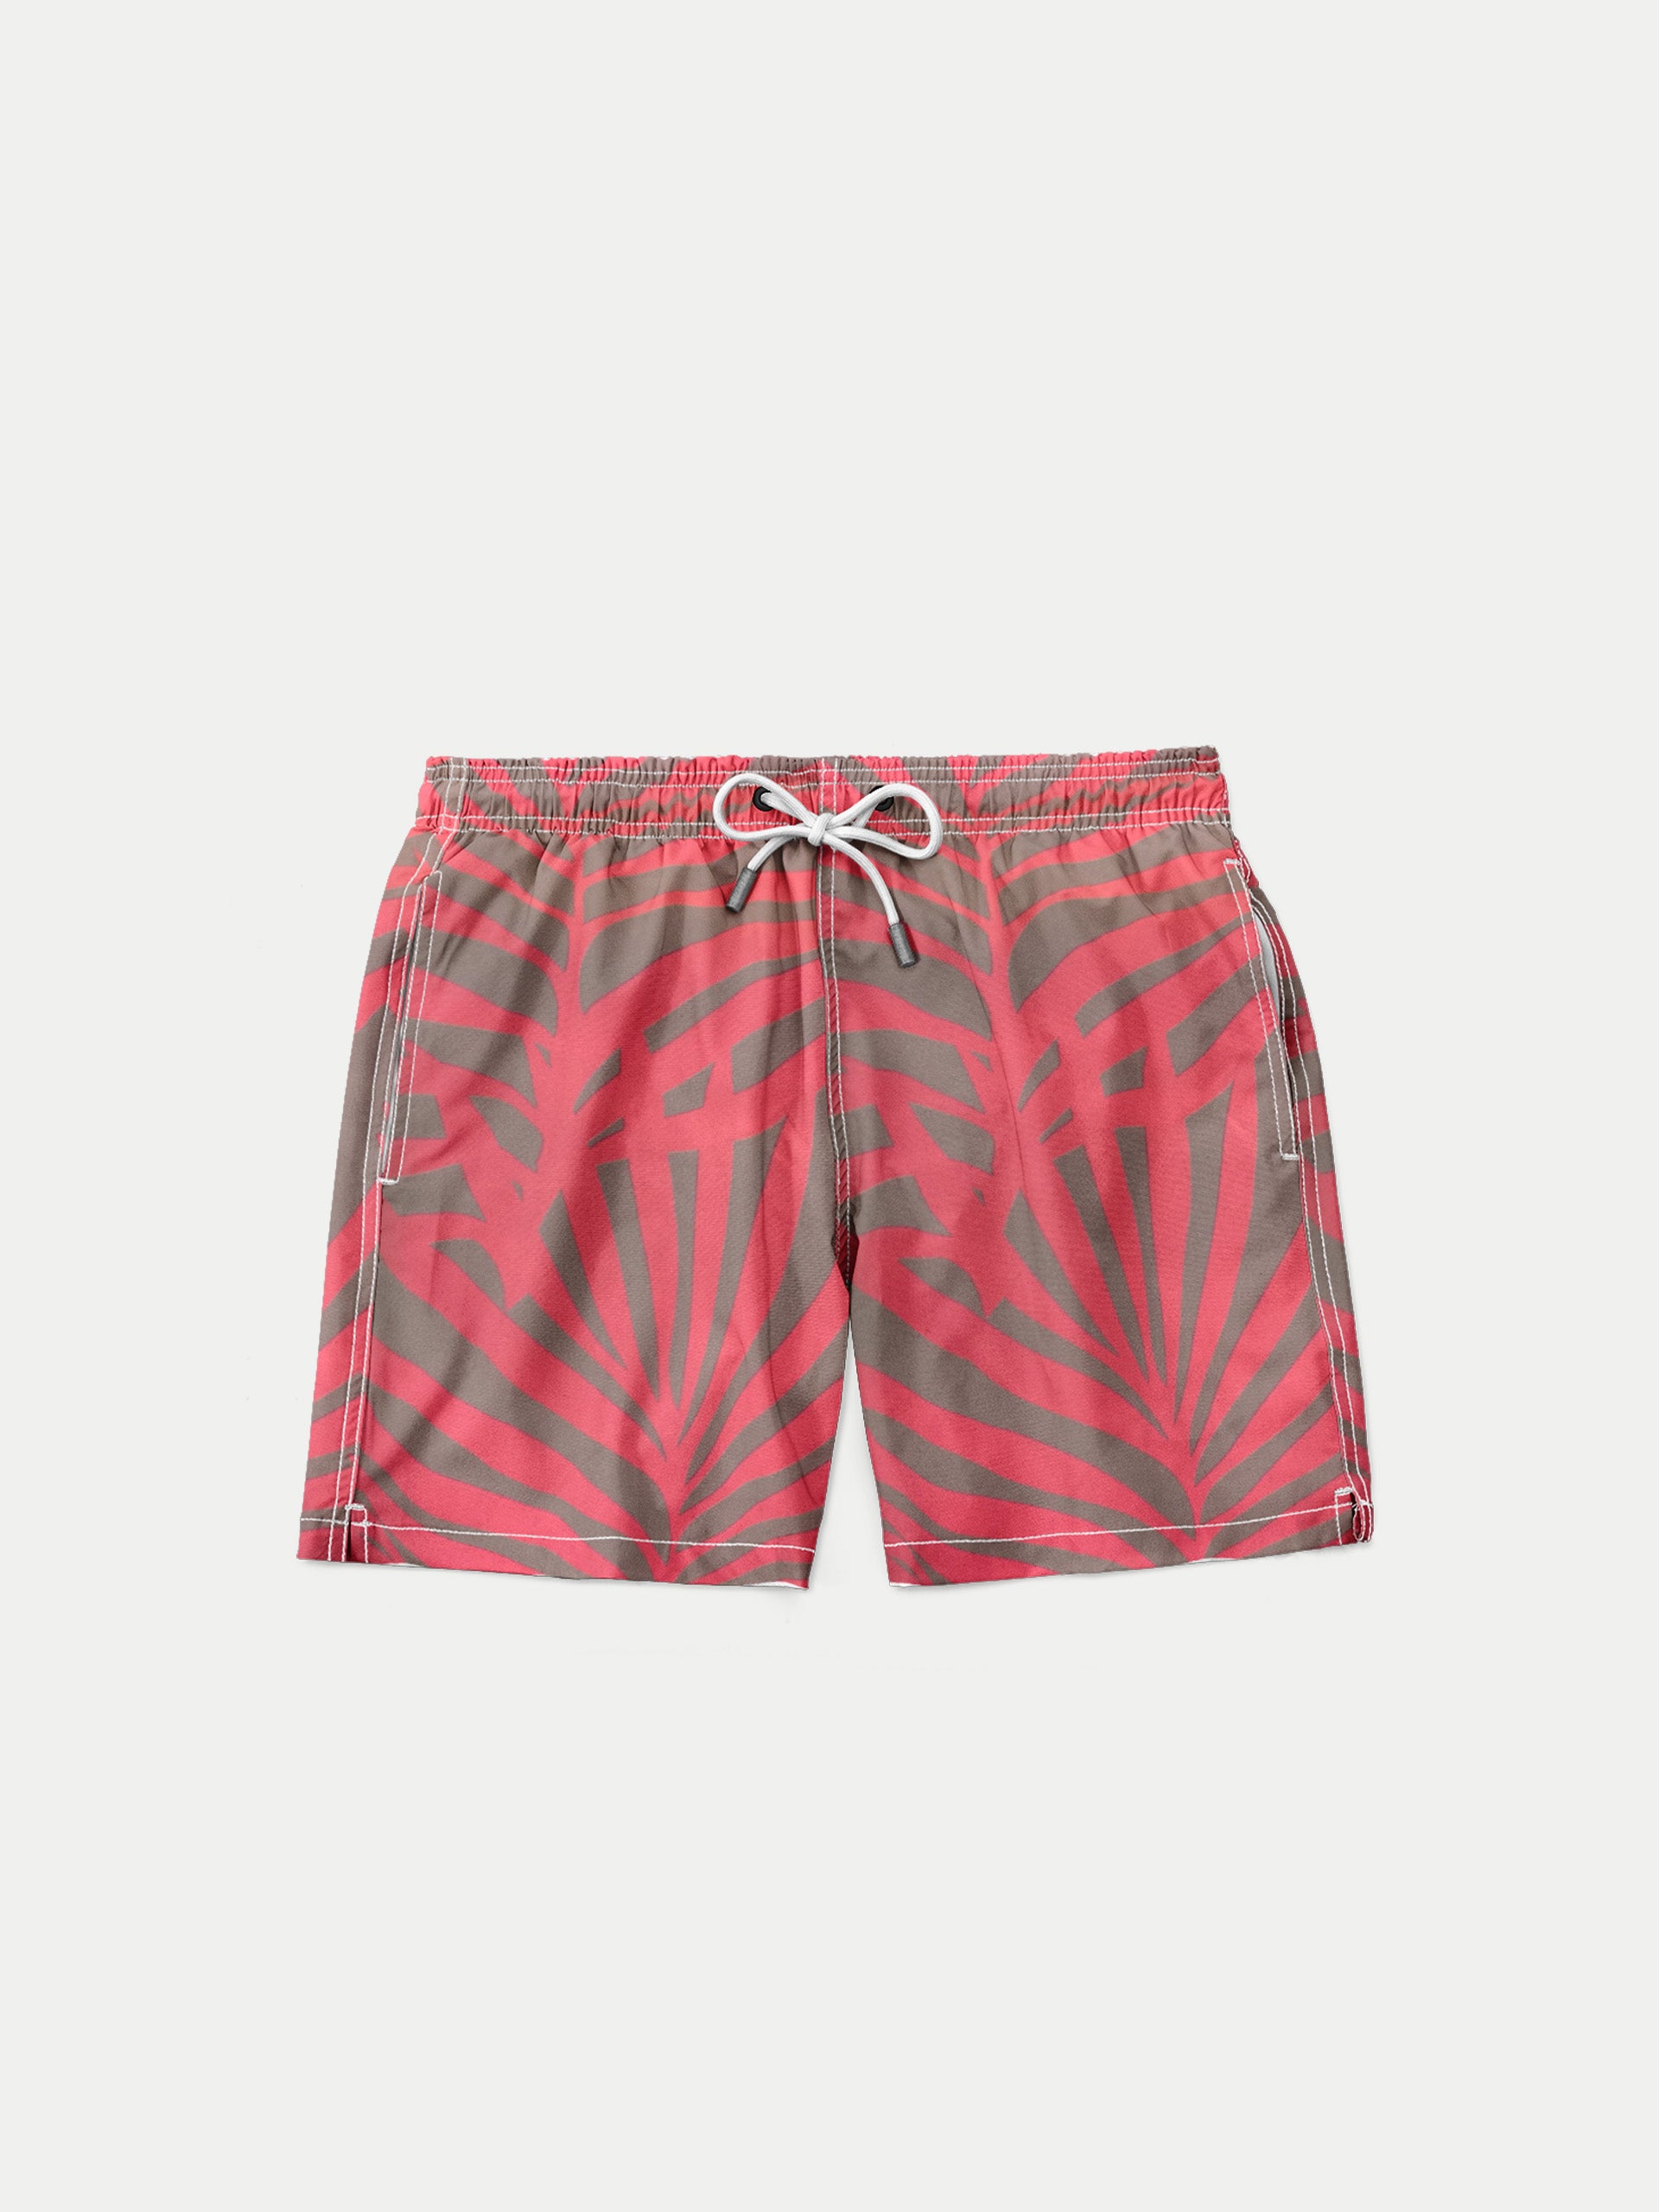 'Breeze Palm Pink' Boys Swim Shorts by 98 Coast Av.